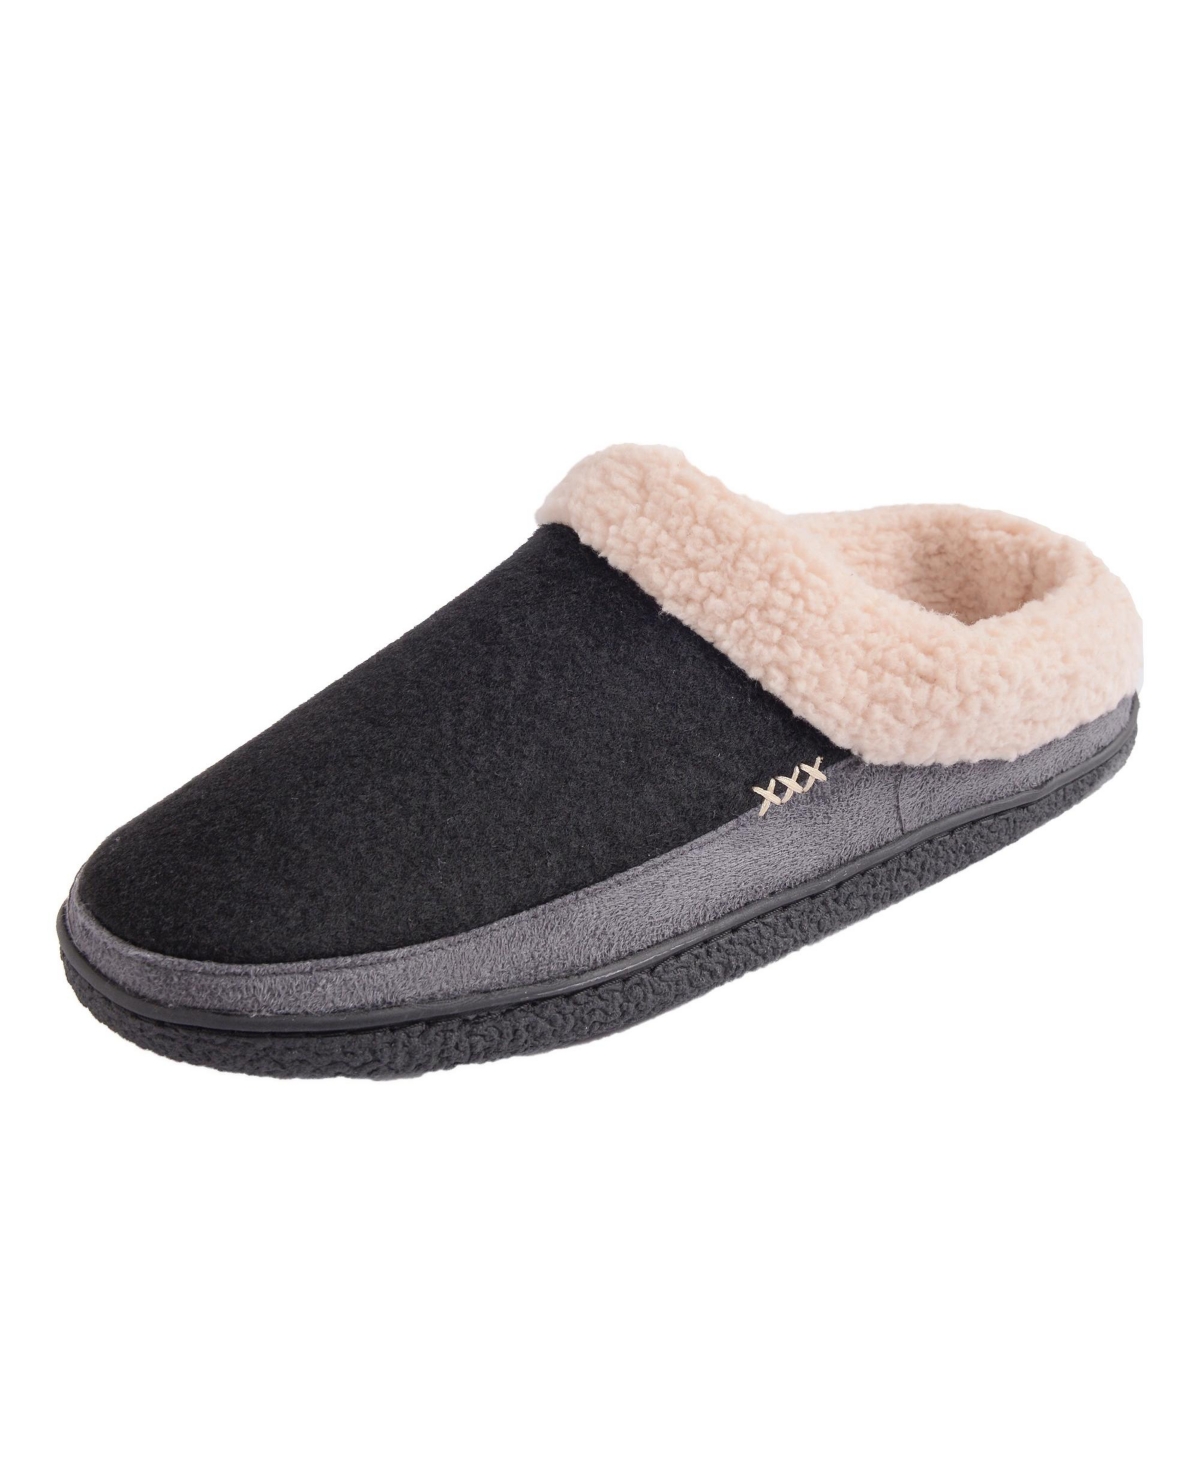 Mens Memory Foam Clog Slippers Fleece Fuzzy Slip On House Shoes - Gray